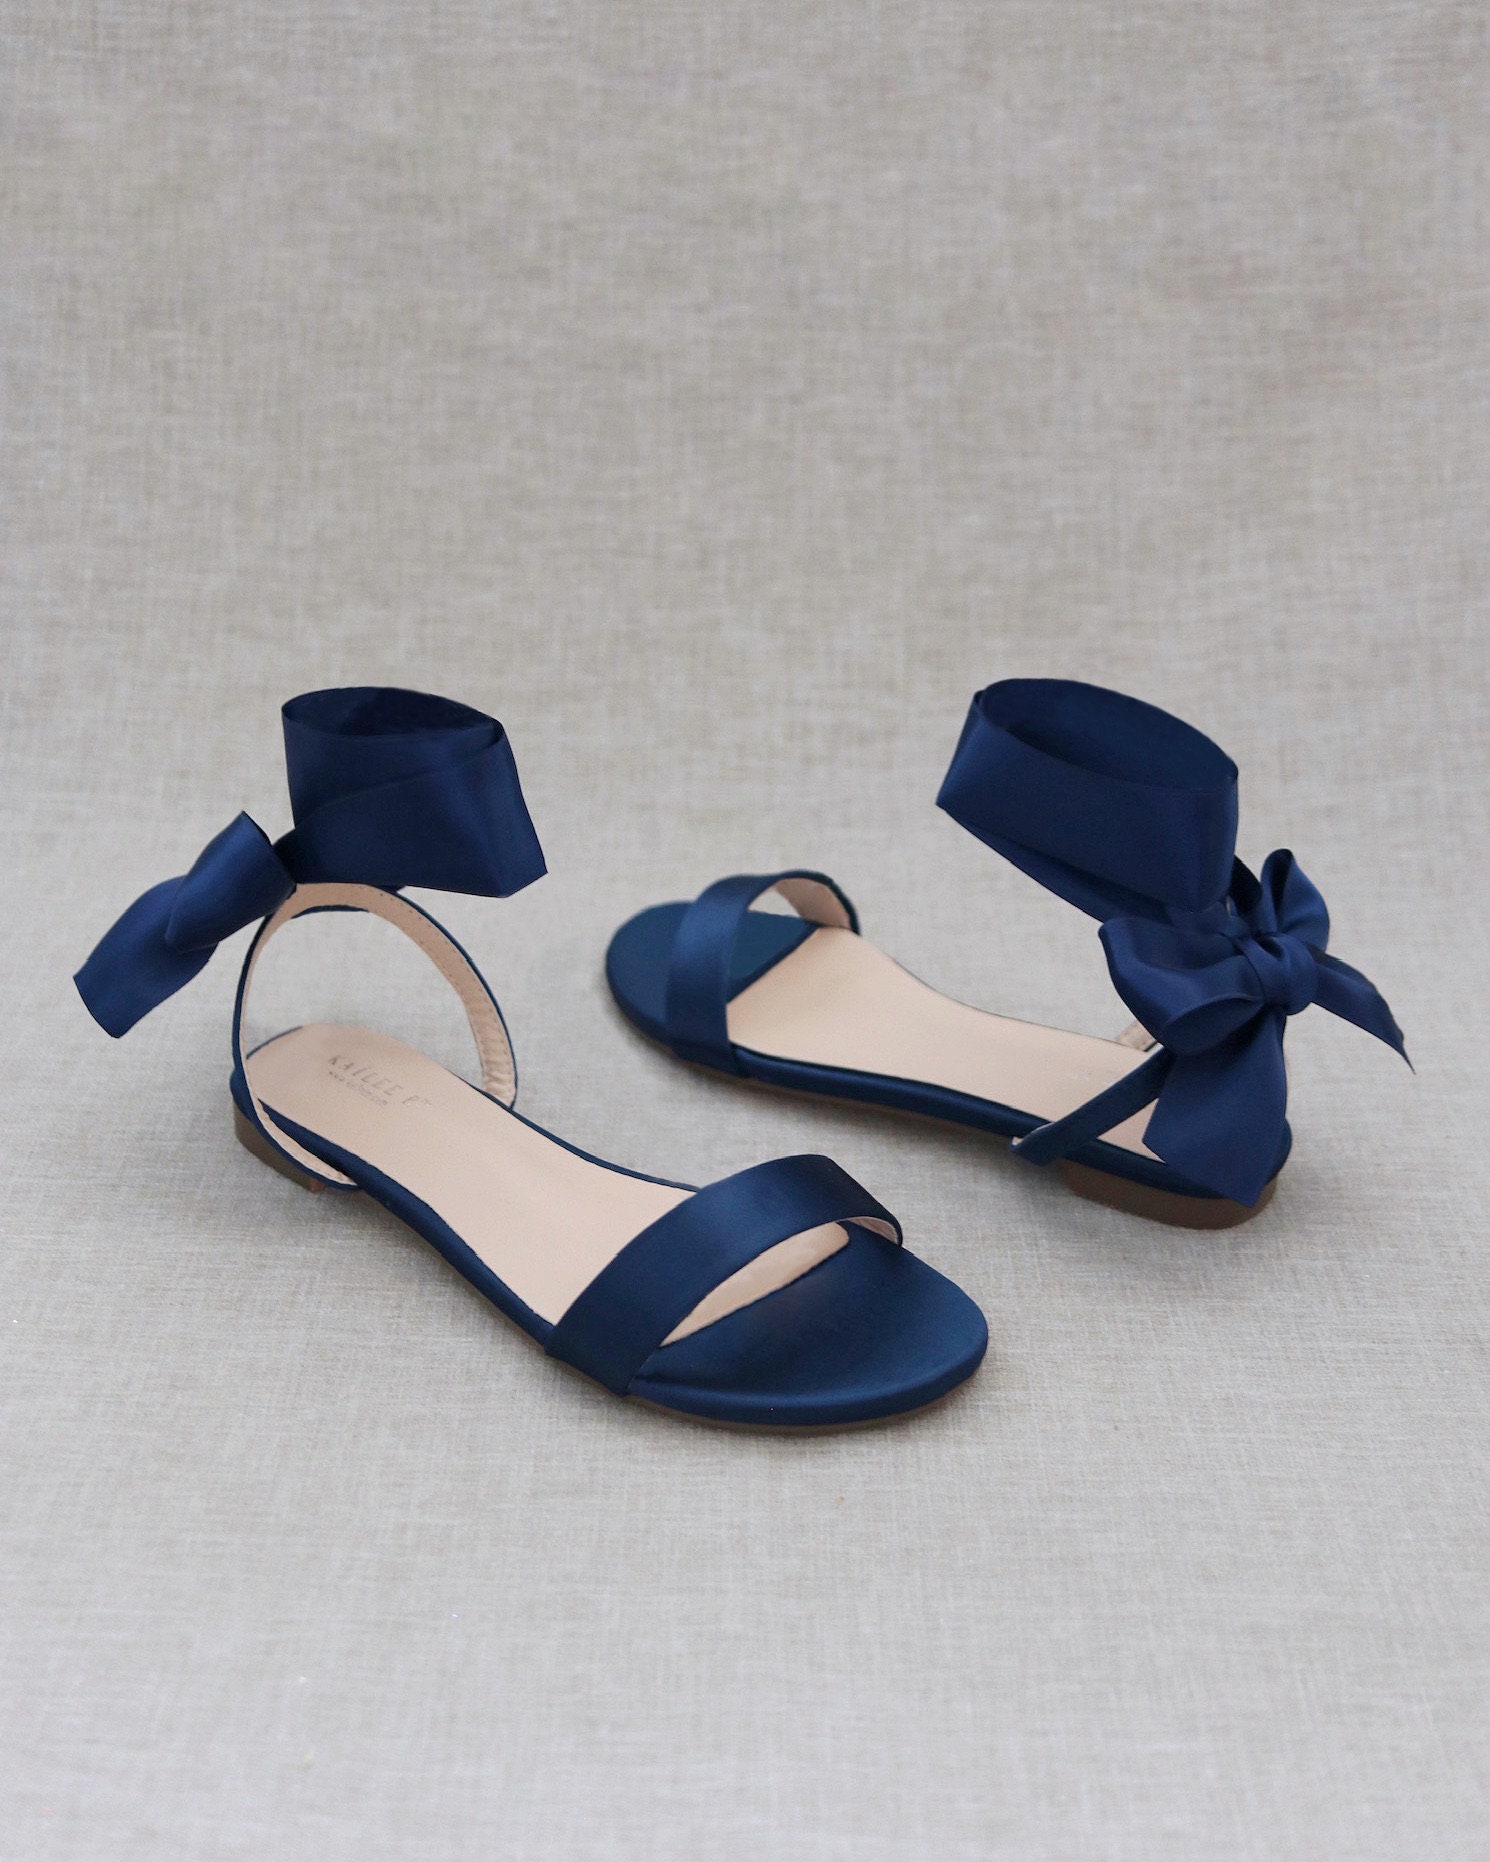 Shoetopia Flats  Buy Shoetopia Stylish Ethnic Blue Flat Sandals for Women   Girls Online  Nykaa Fashion